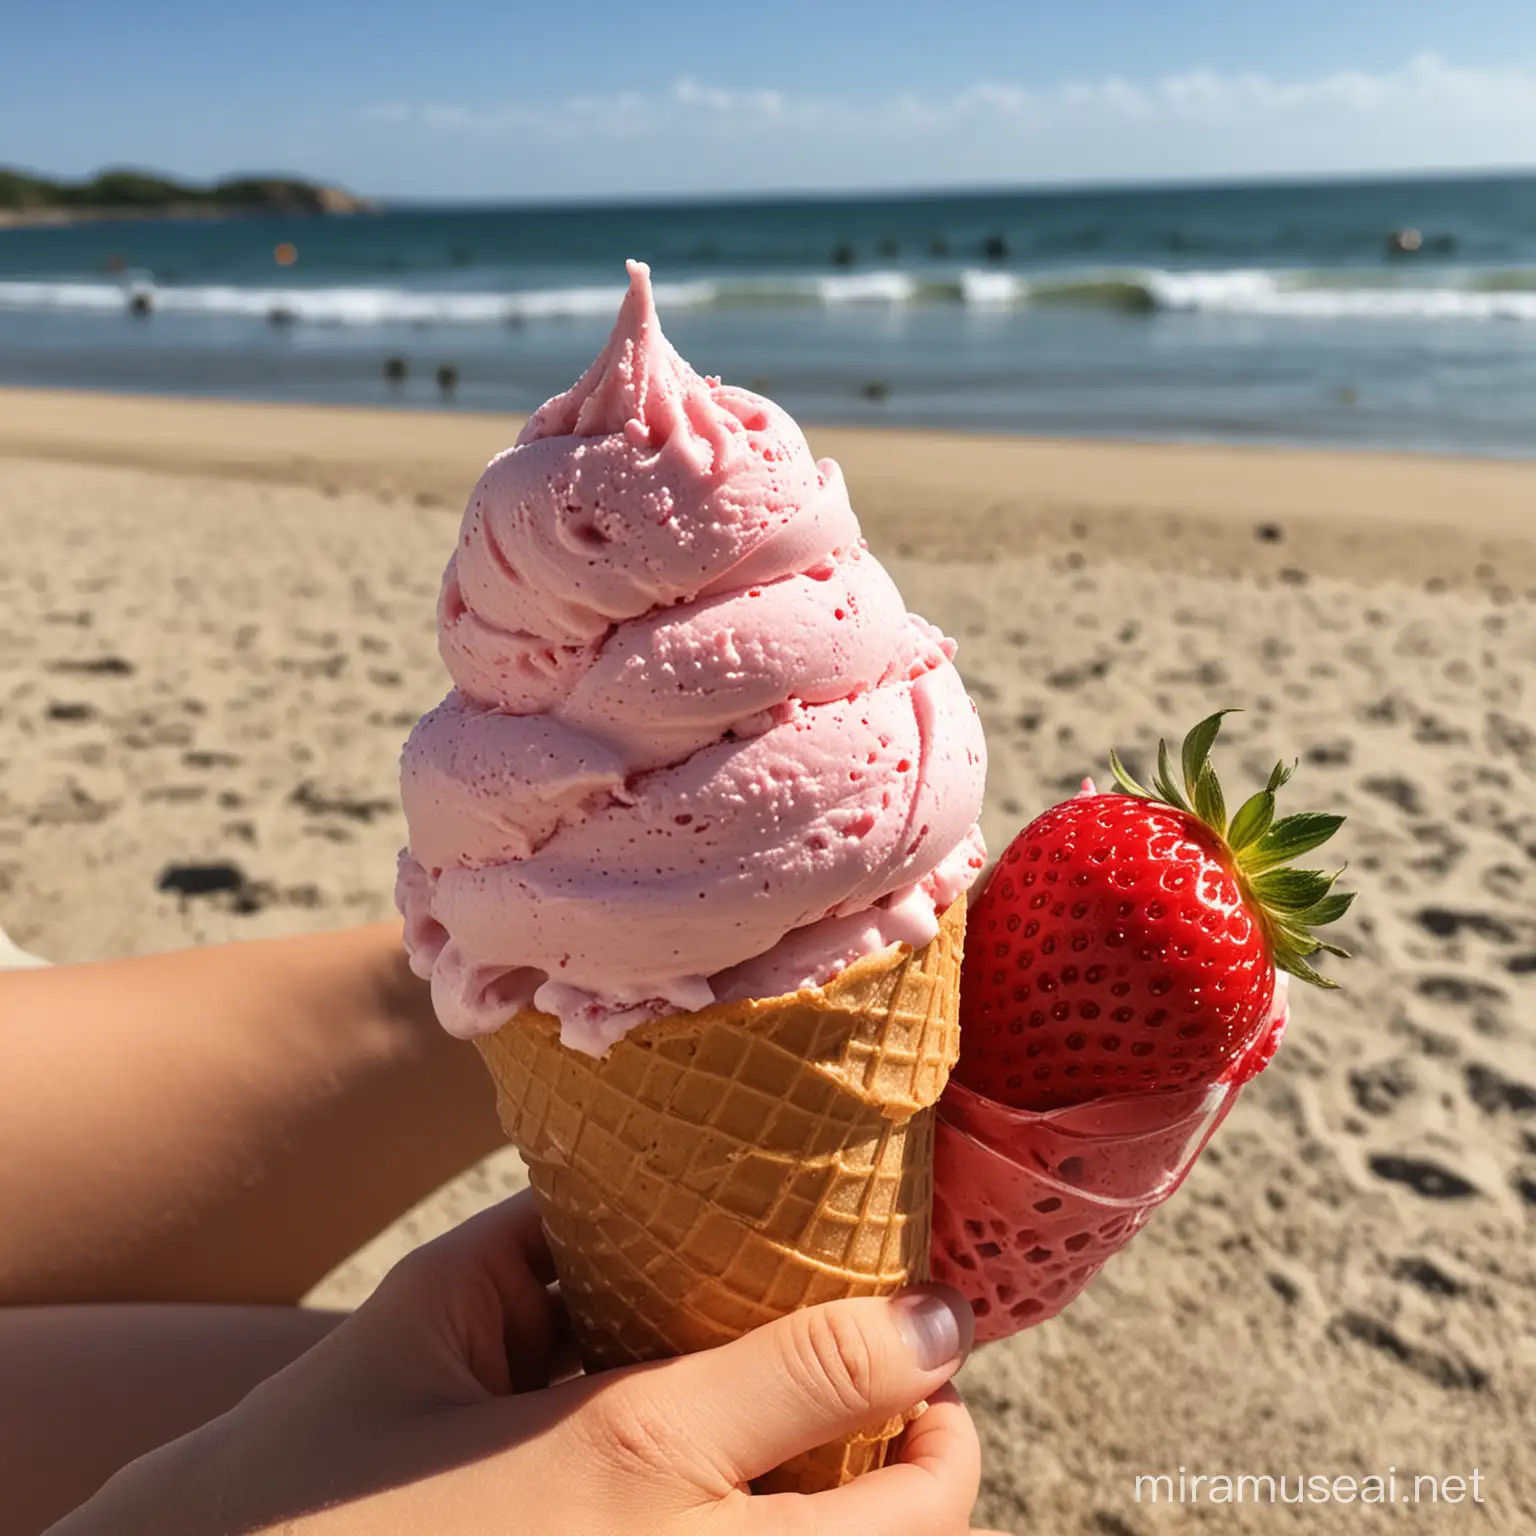 People Enjoying Strawberry Ice Cream on a Sunny Beach